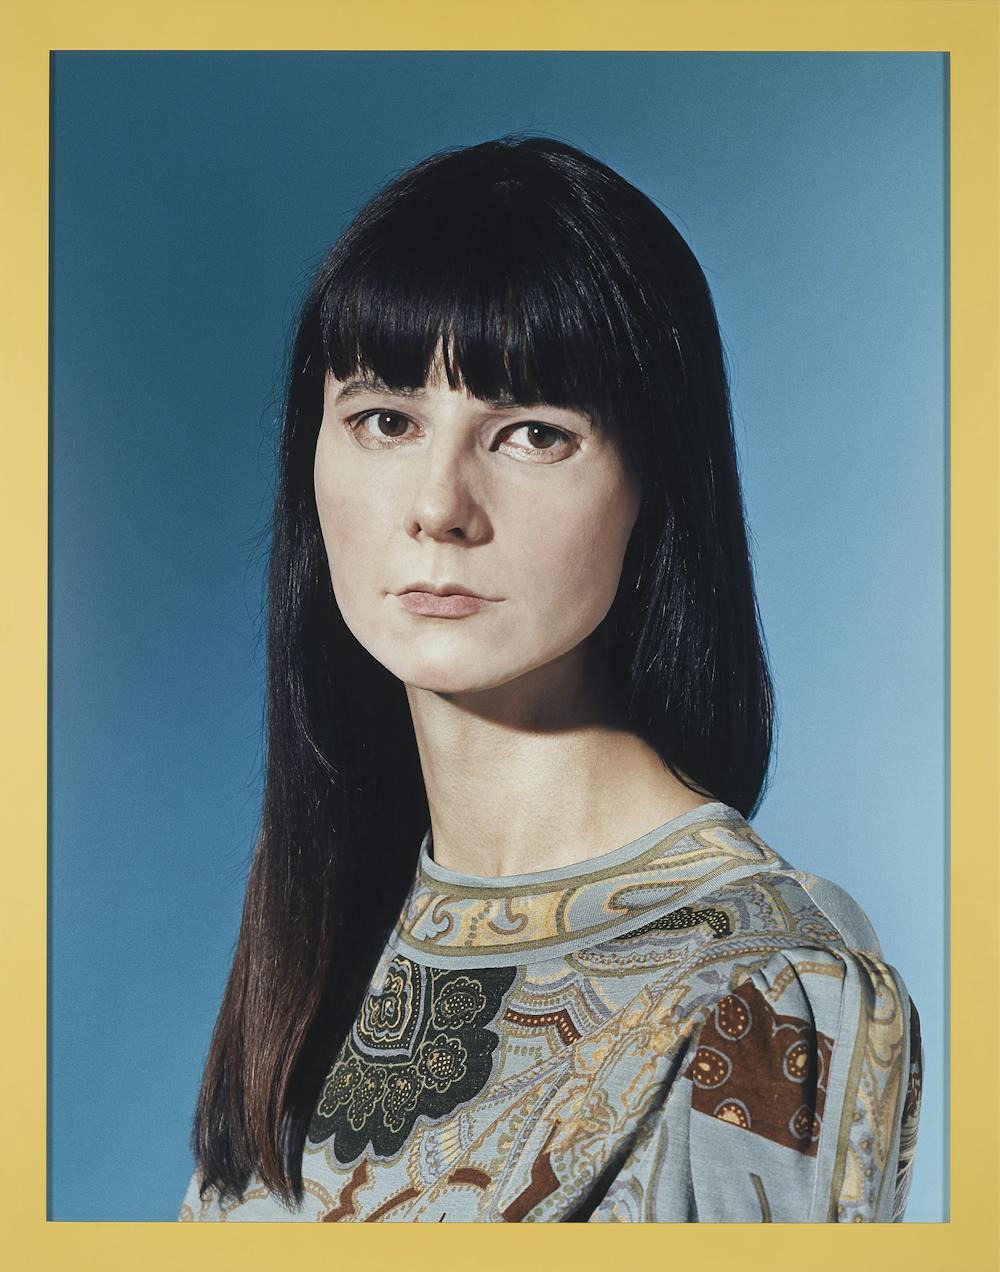 Cindy Sherman: self-portraits of the artist as an everywoman